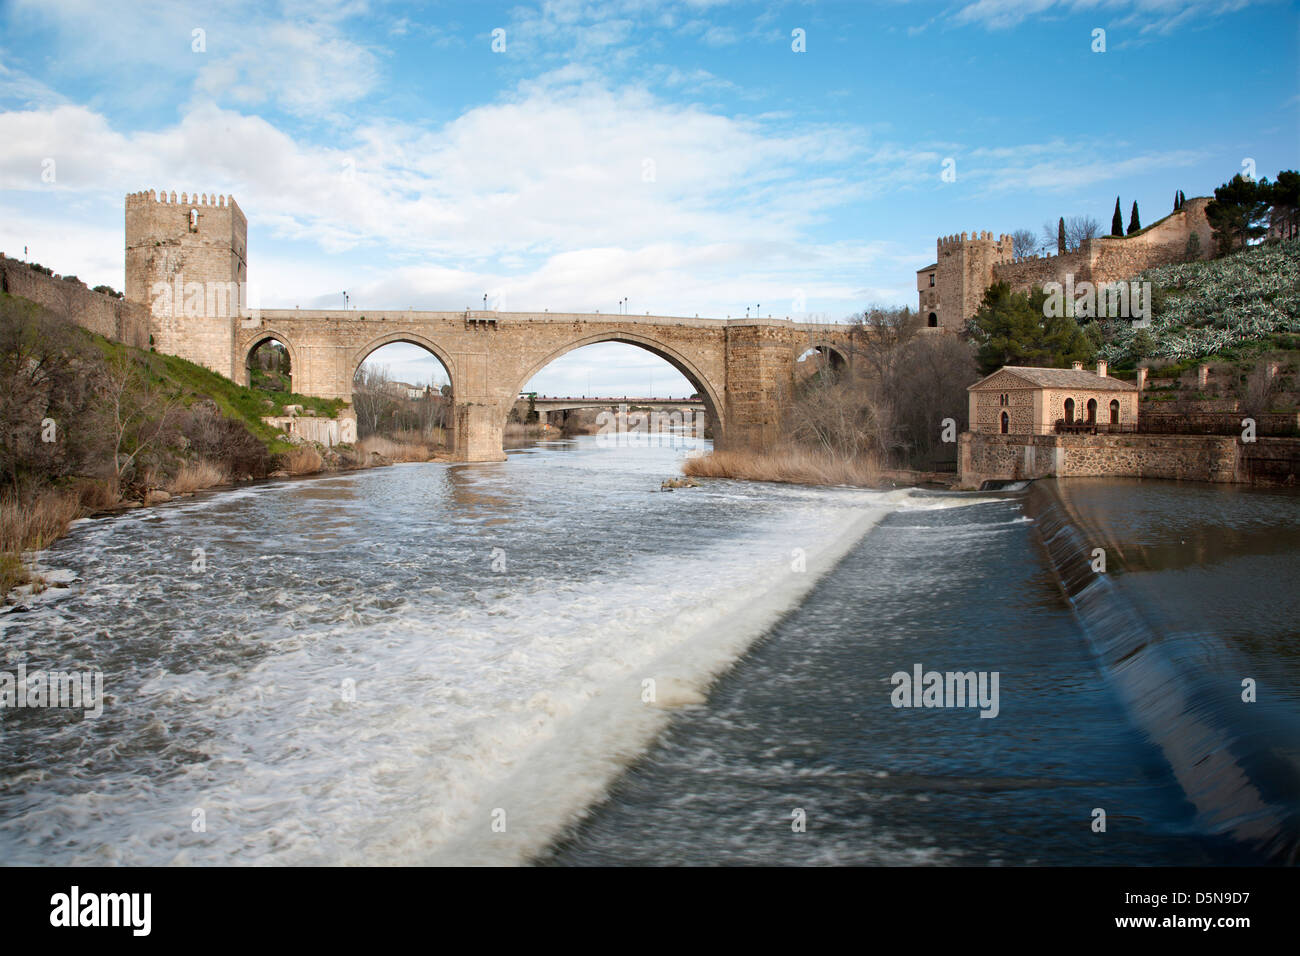 Toledo - Puente de San Martin bridge Foto Stock